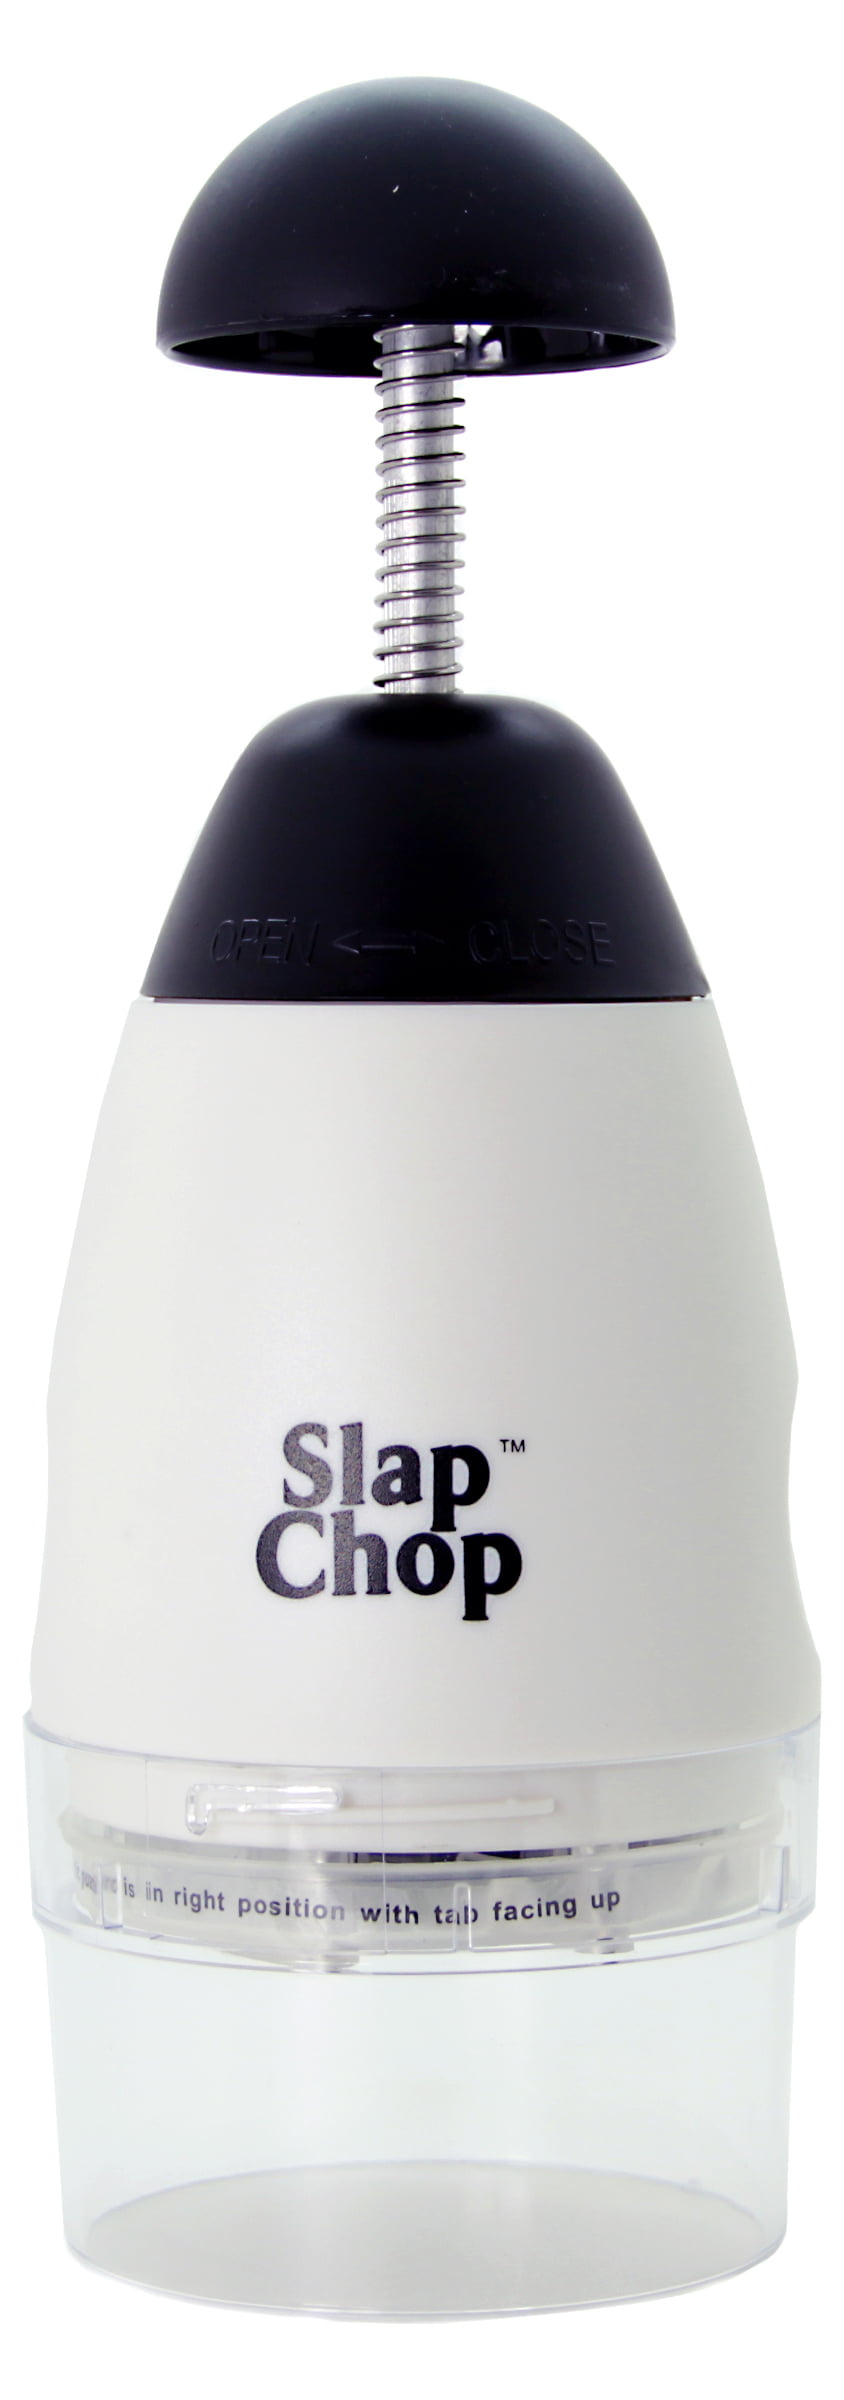 Original Slap Chop Slicer with Stainless Steel Blades